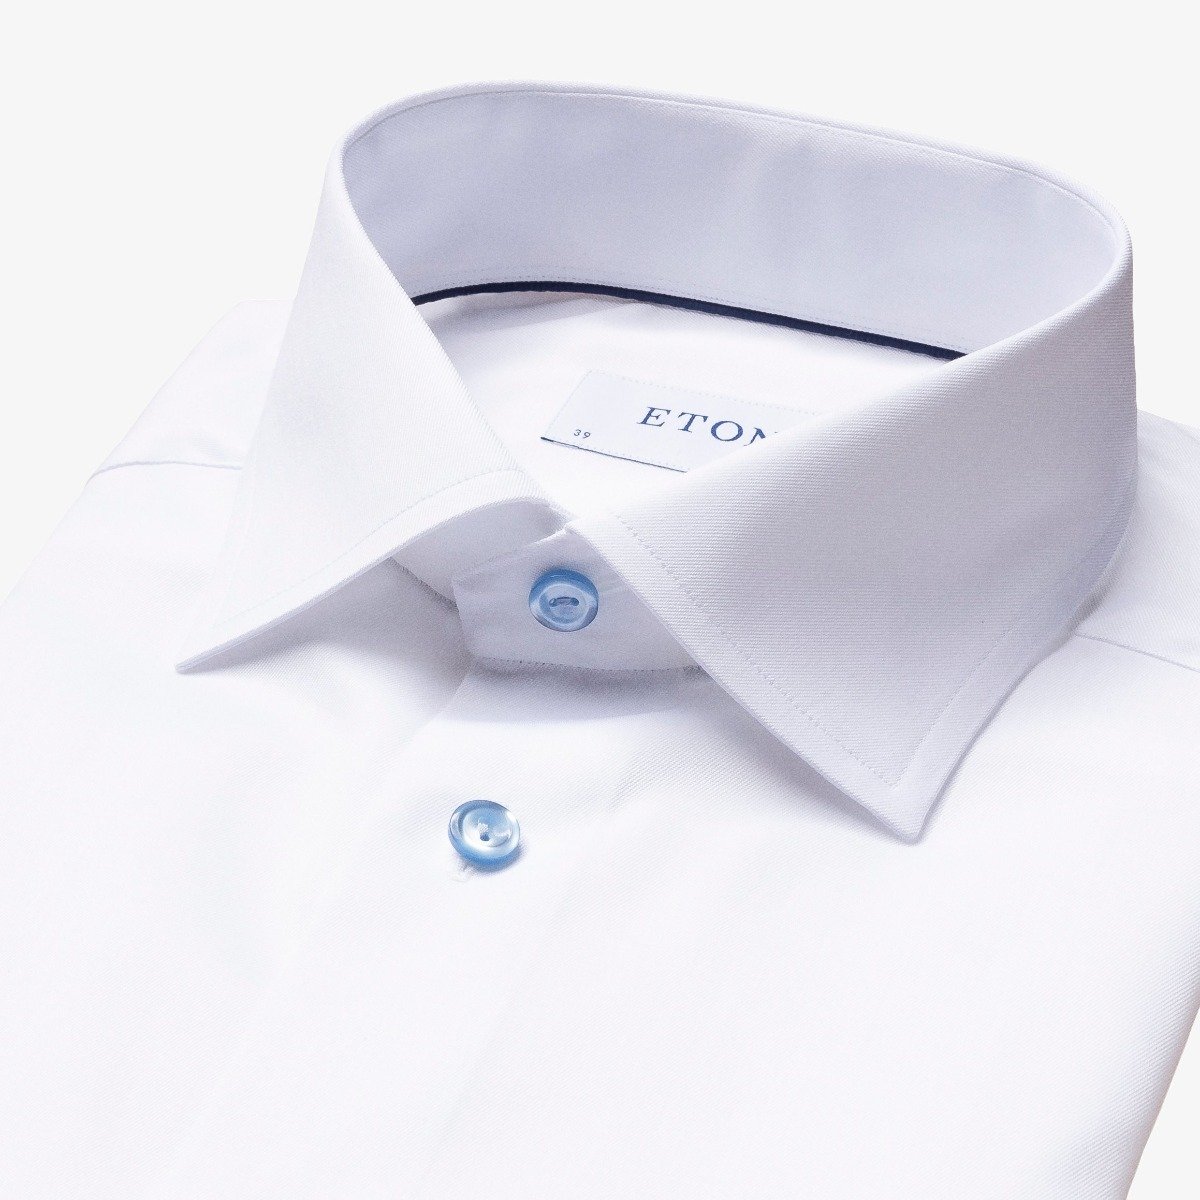 Eton white slim fit signature twill men's dress shirt - Blue buttons